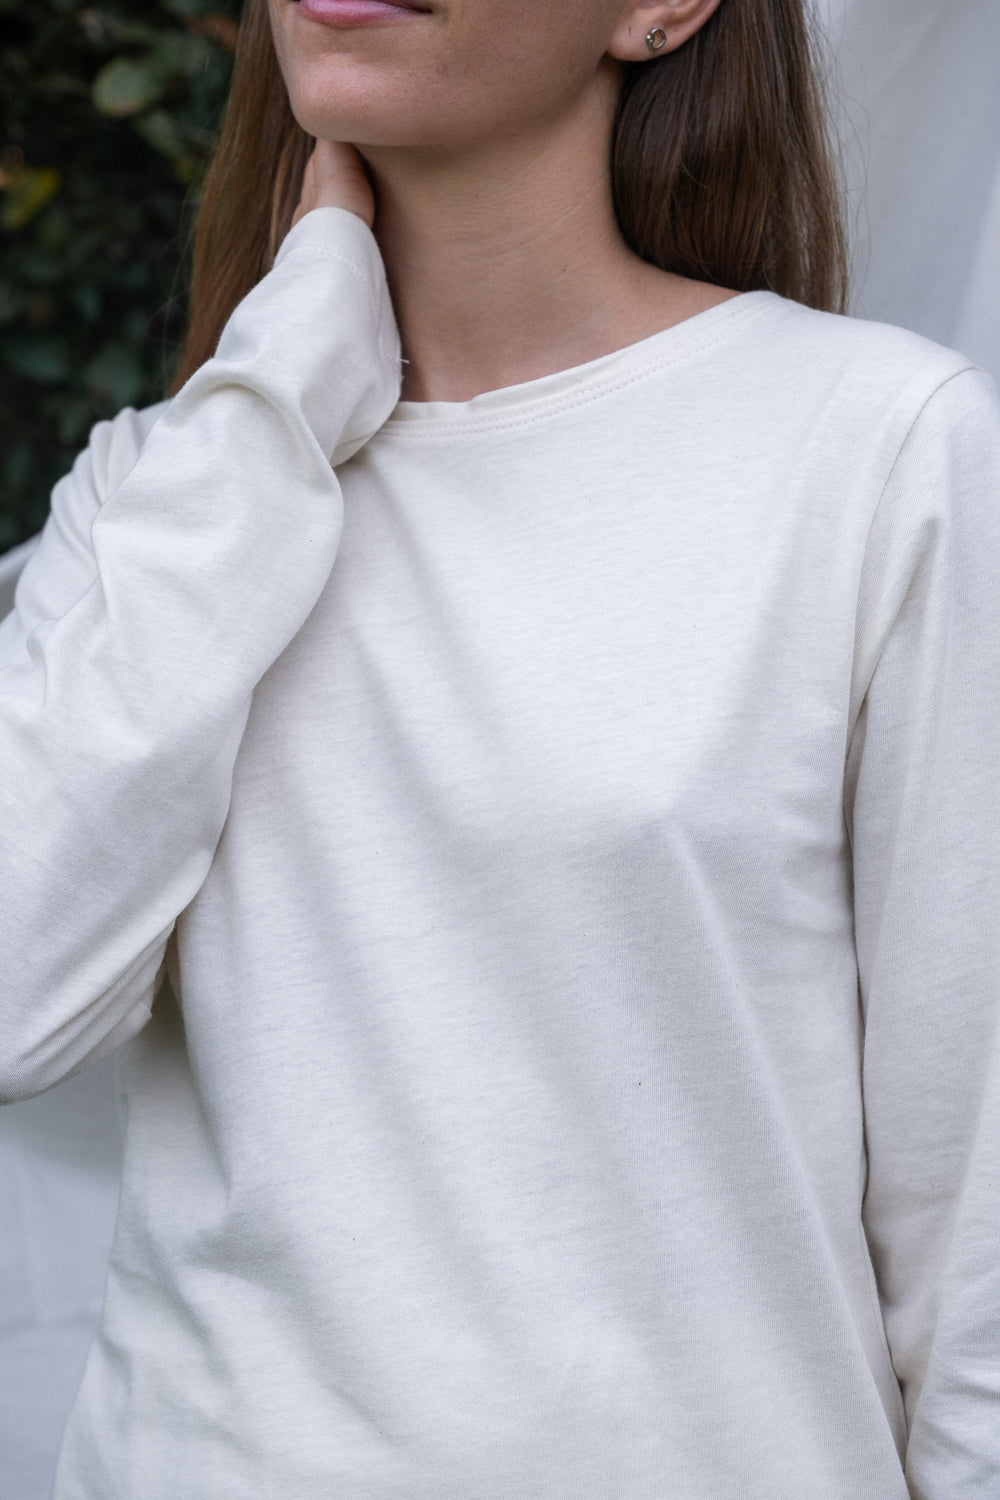 MIA Moda Regenerativa Camisetas S / natural Camiseta Esencial mujer manga larga - blanco y natural